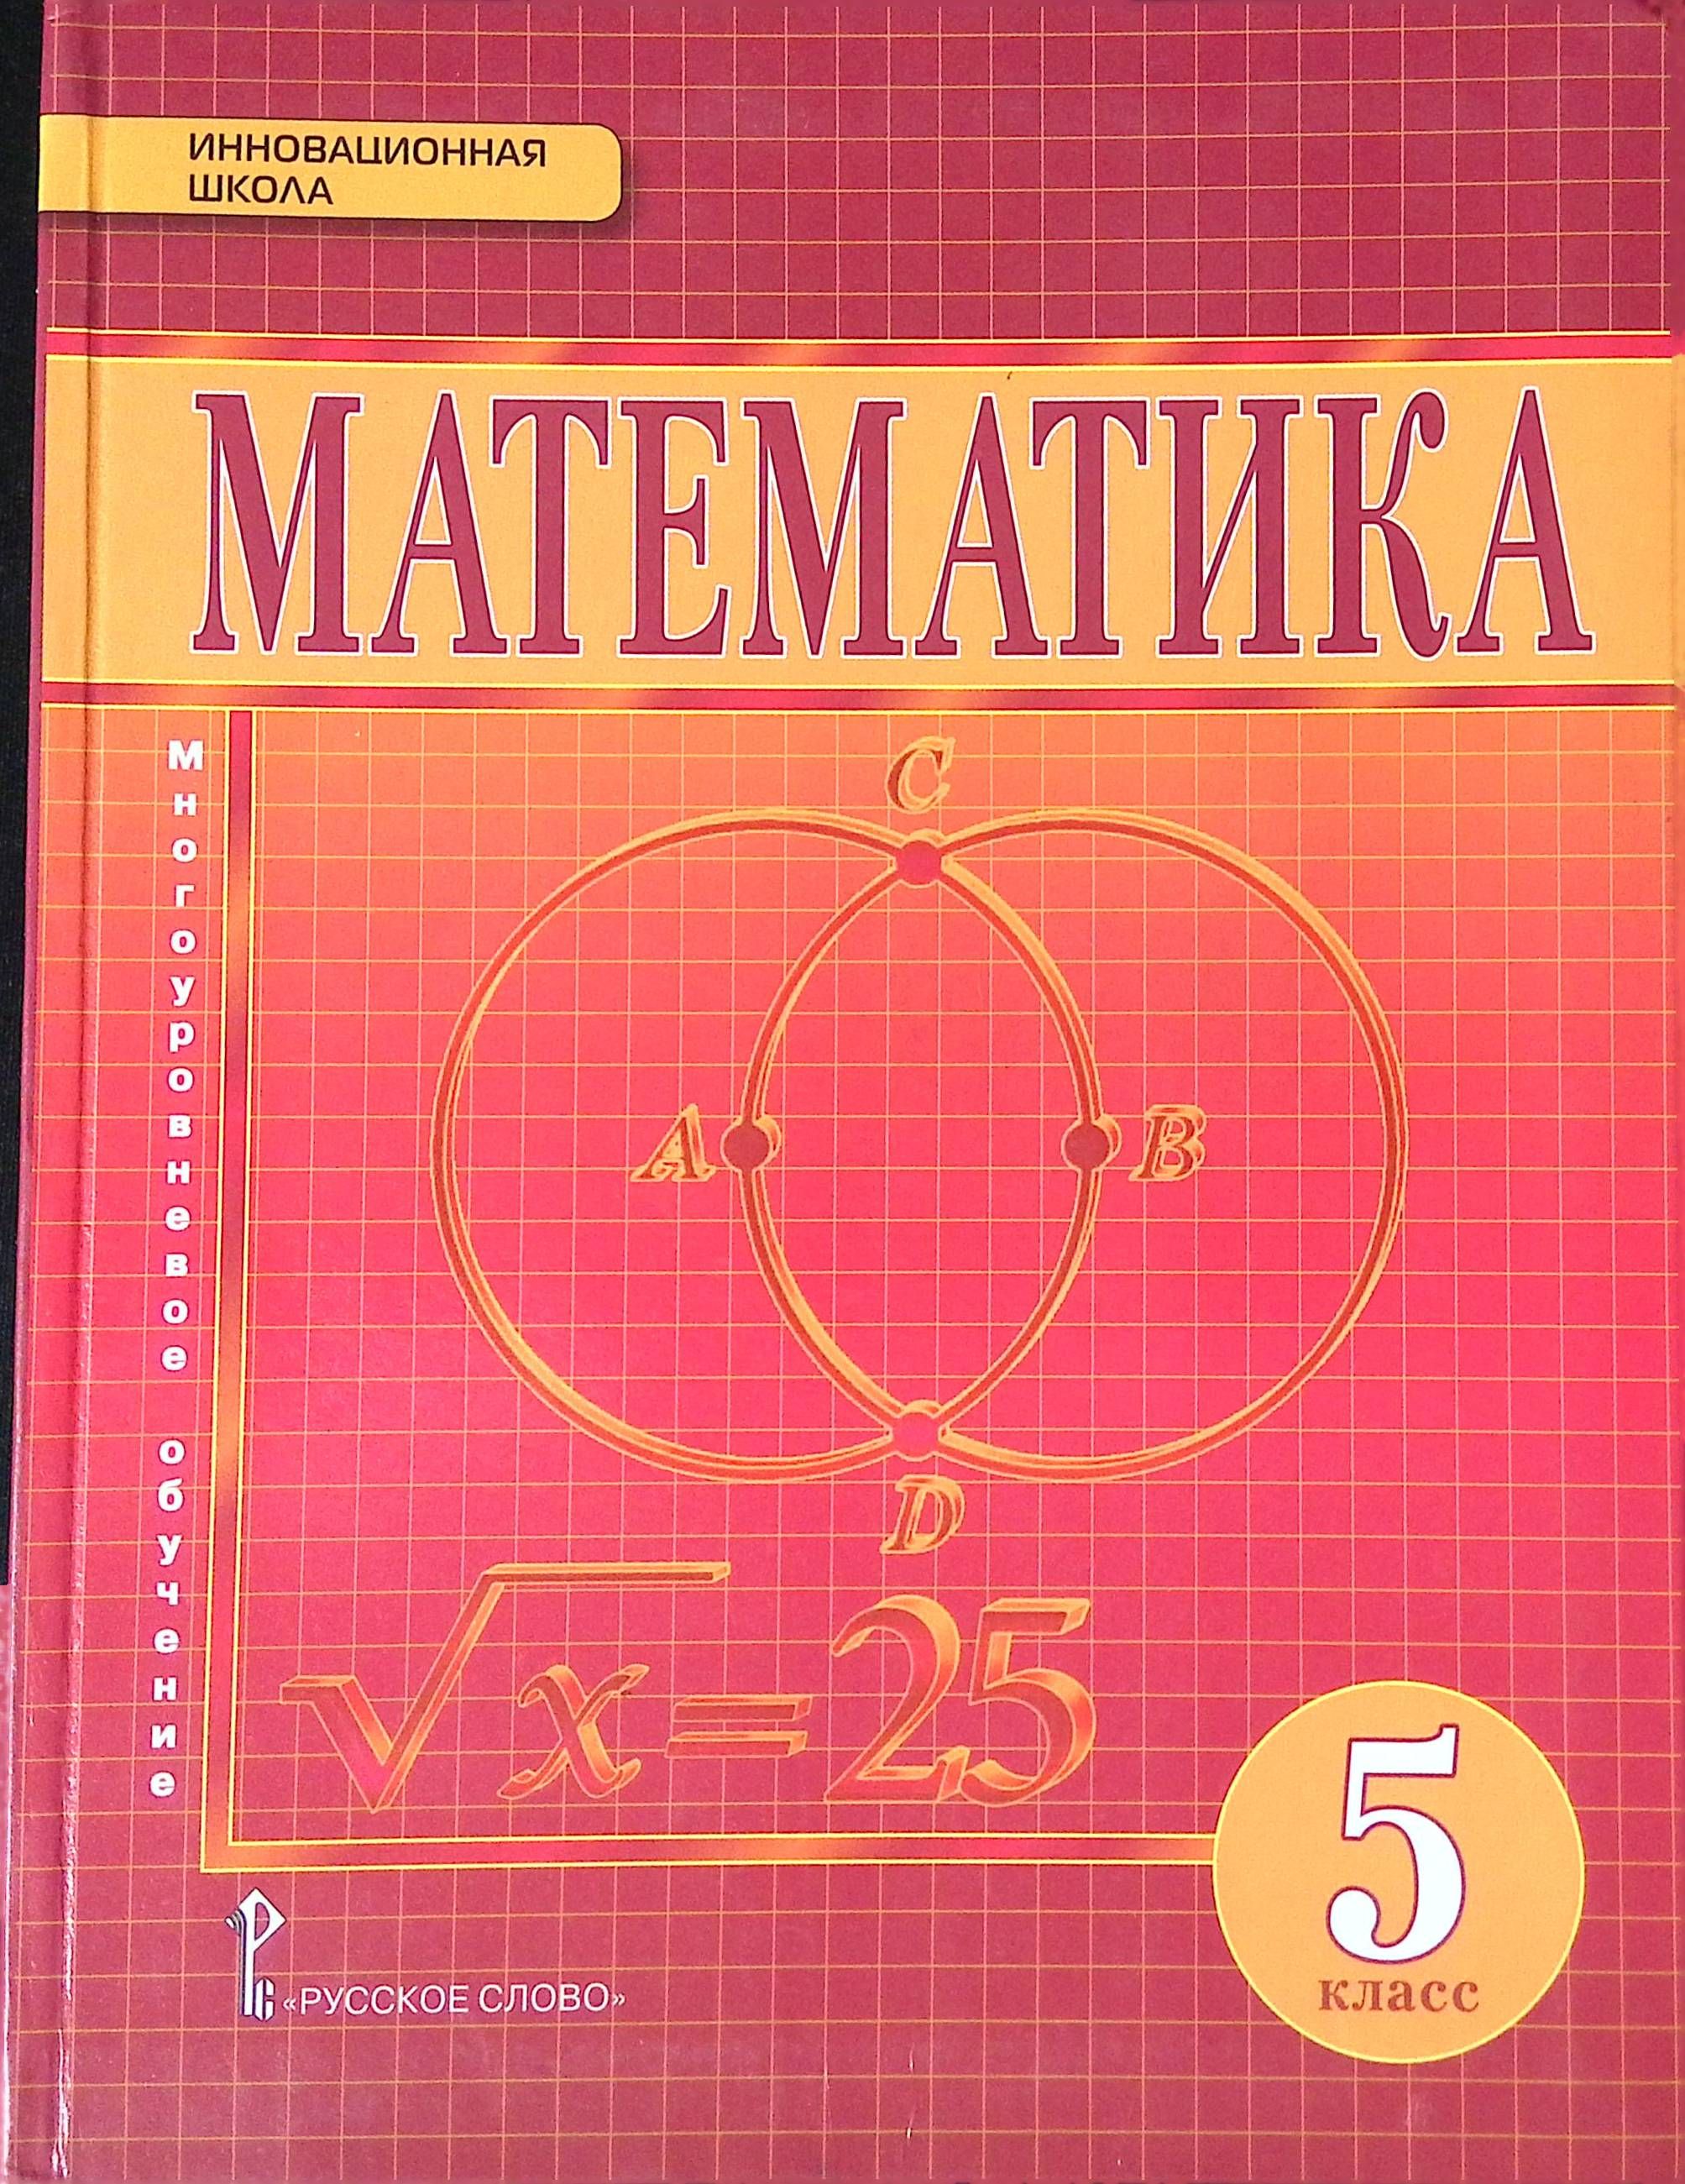 Углубленная математика 5 класс. Математика Никитин , Козлов 5 класс. Учебник математики. Учебник математики 6 класс. Математика 6 класс. Учебник.